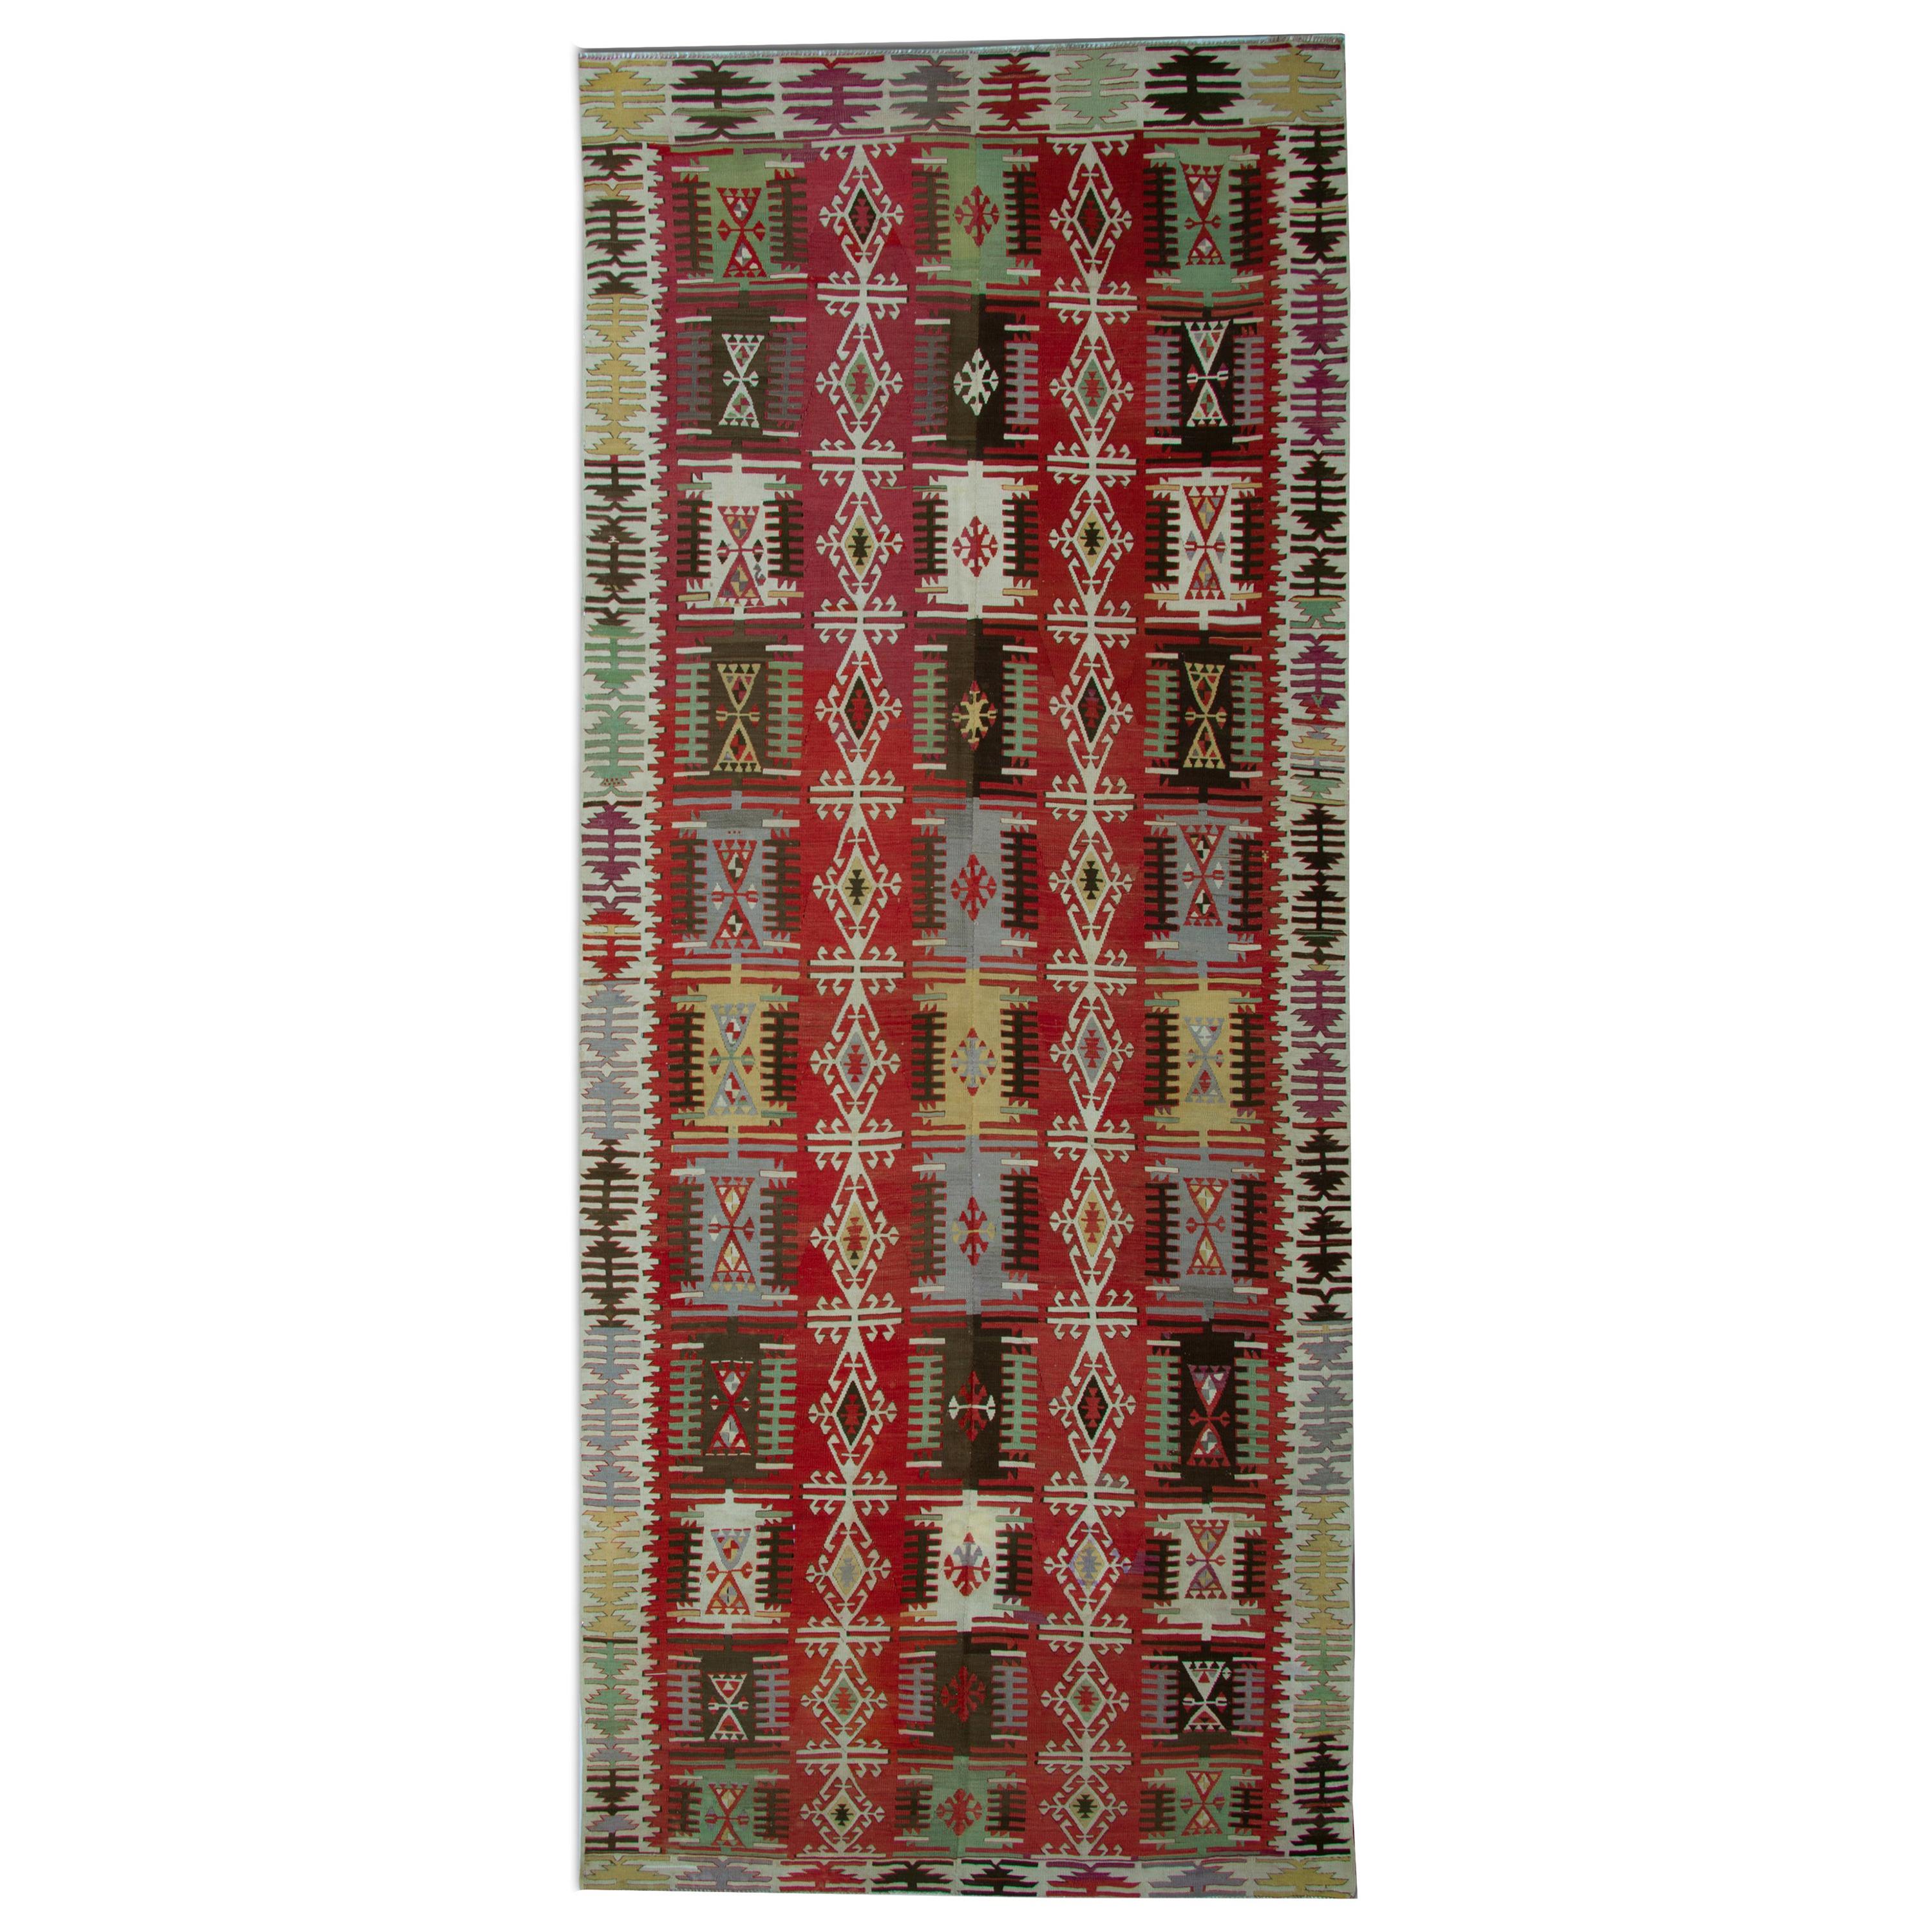 Tapis Kilim faits main, tapis orientaux de Turquie, tapis de Turquie à vendre